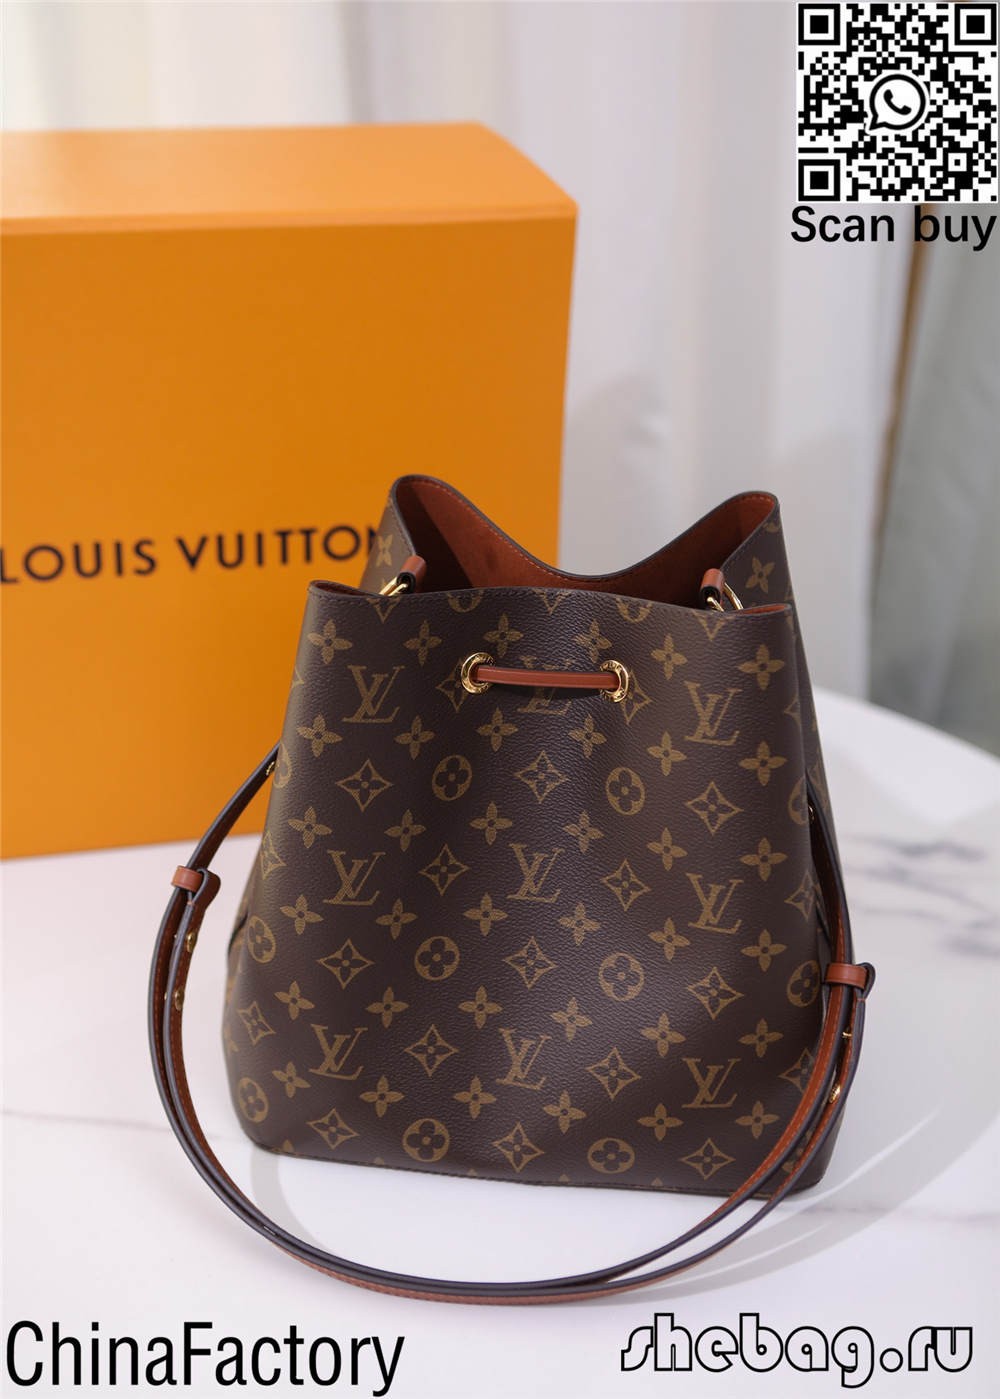 -Best Quality Fake Louis Vuitton Bag Online Store, Replica designer bag ru